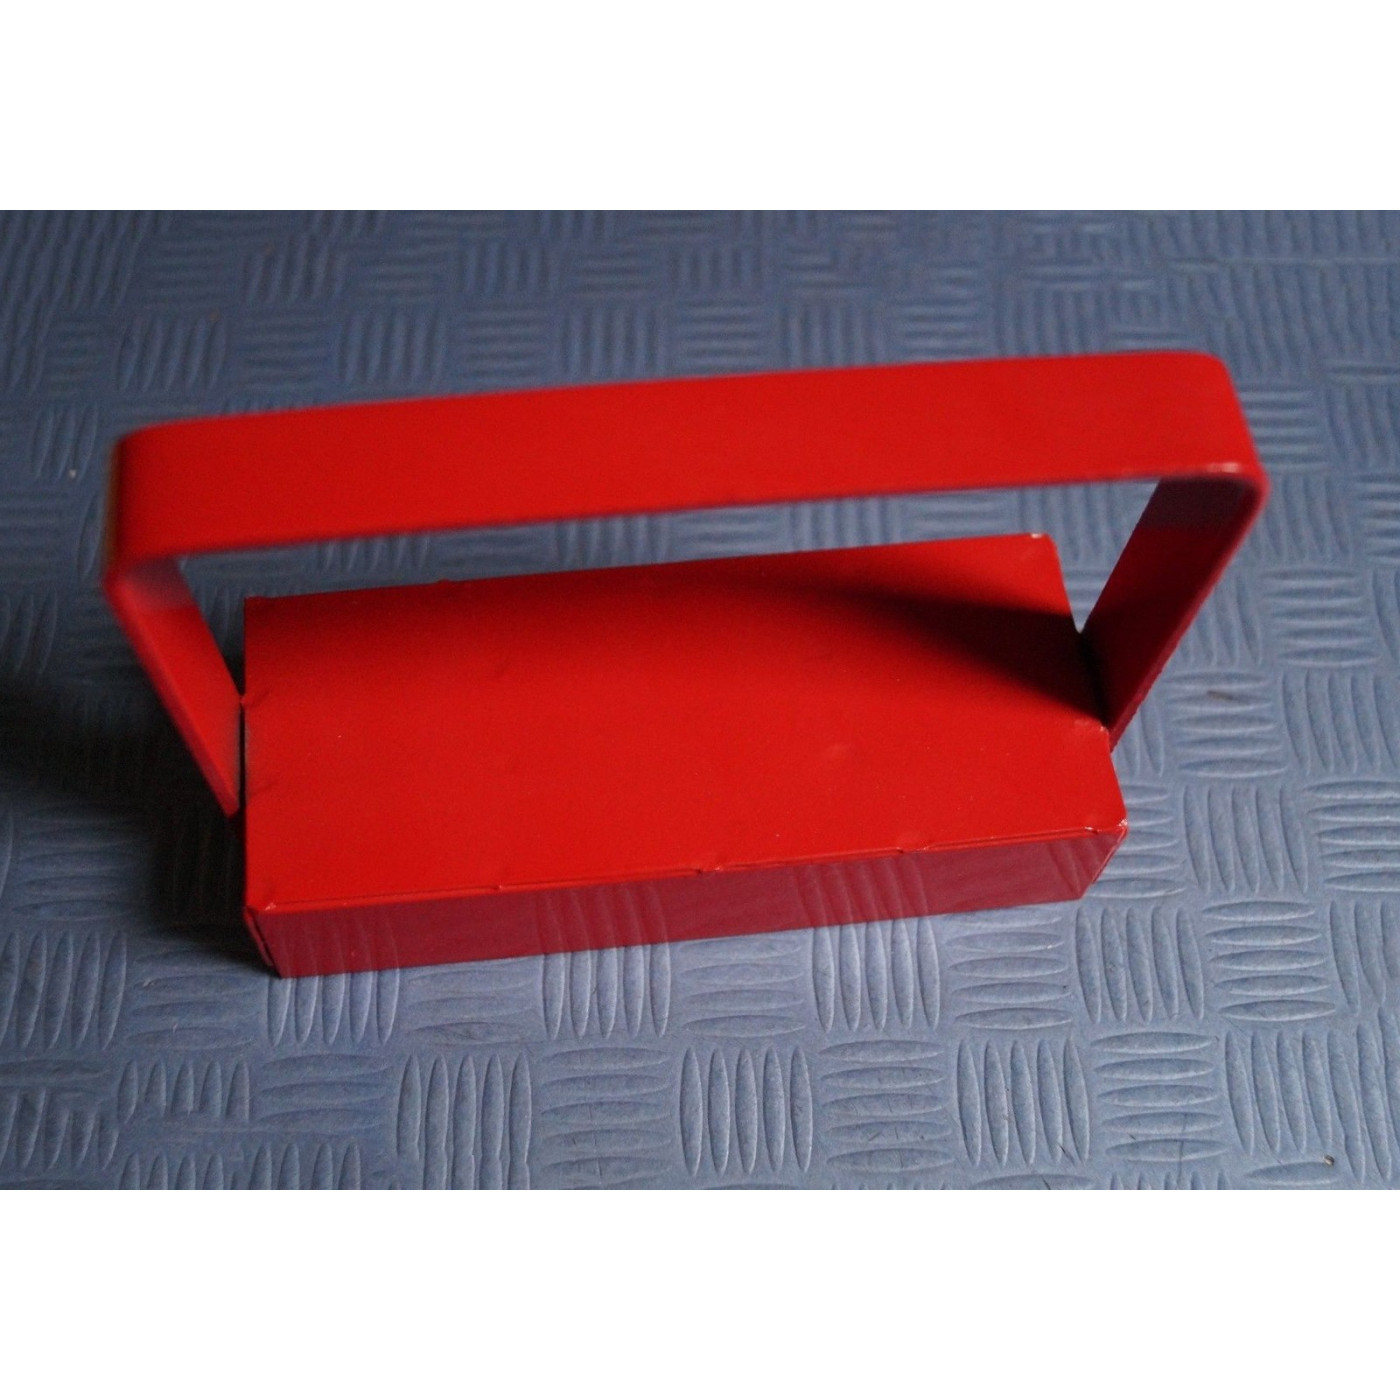 Magnete gancio / gancio magnete rosso XL, con impugnatura